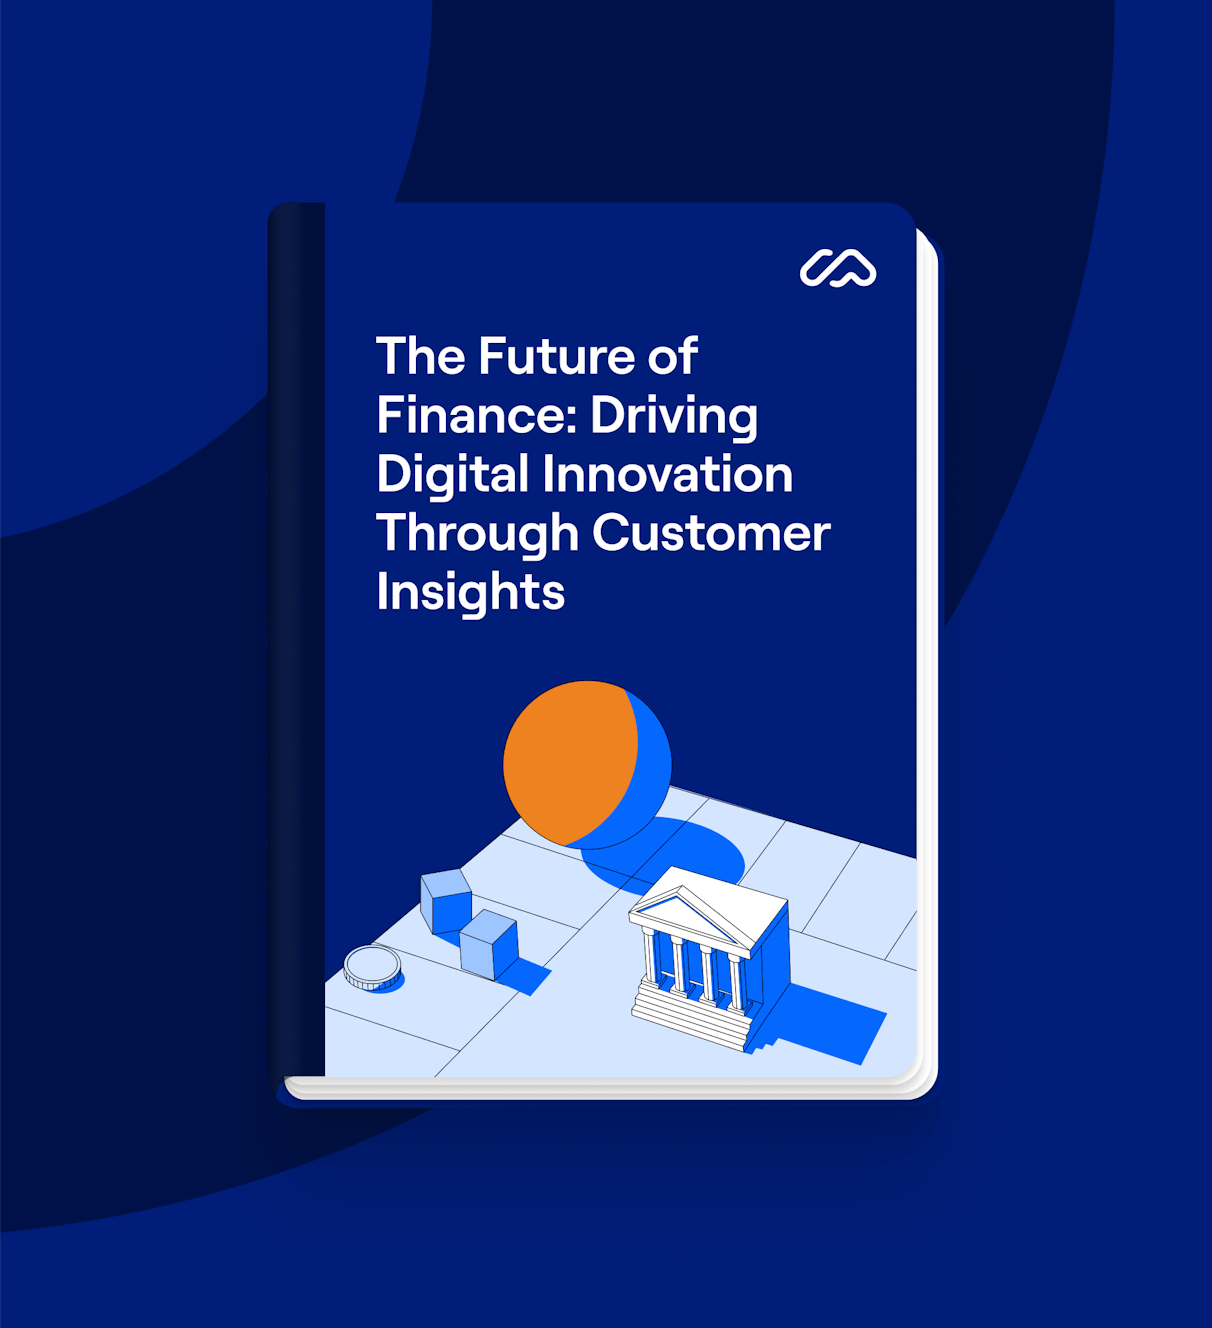 The Future of Finance: Driving Digital Innovation Through Customer Insights